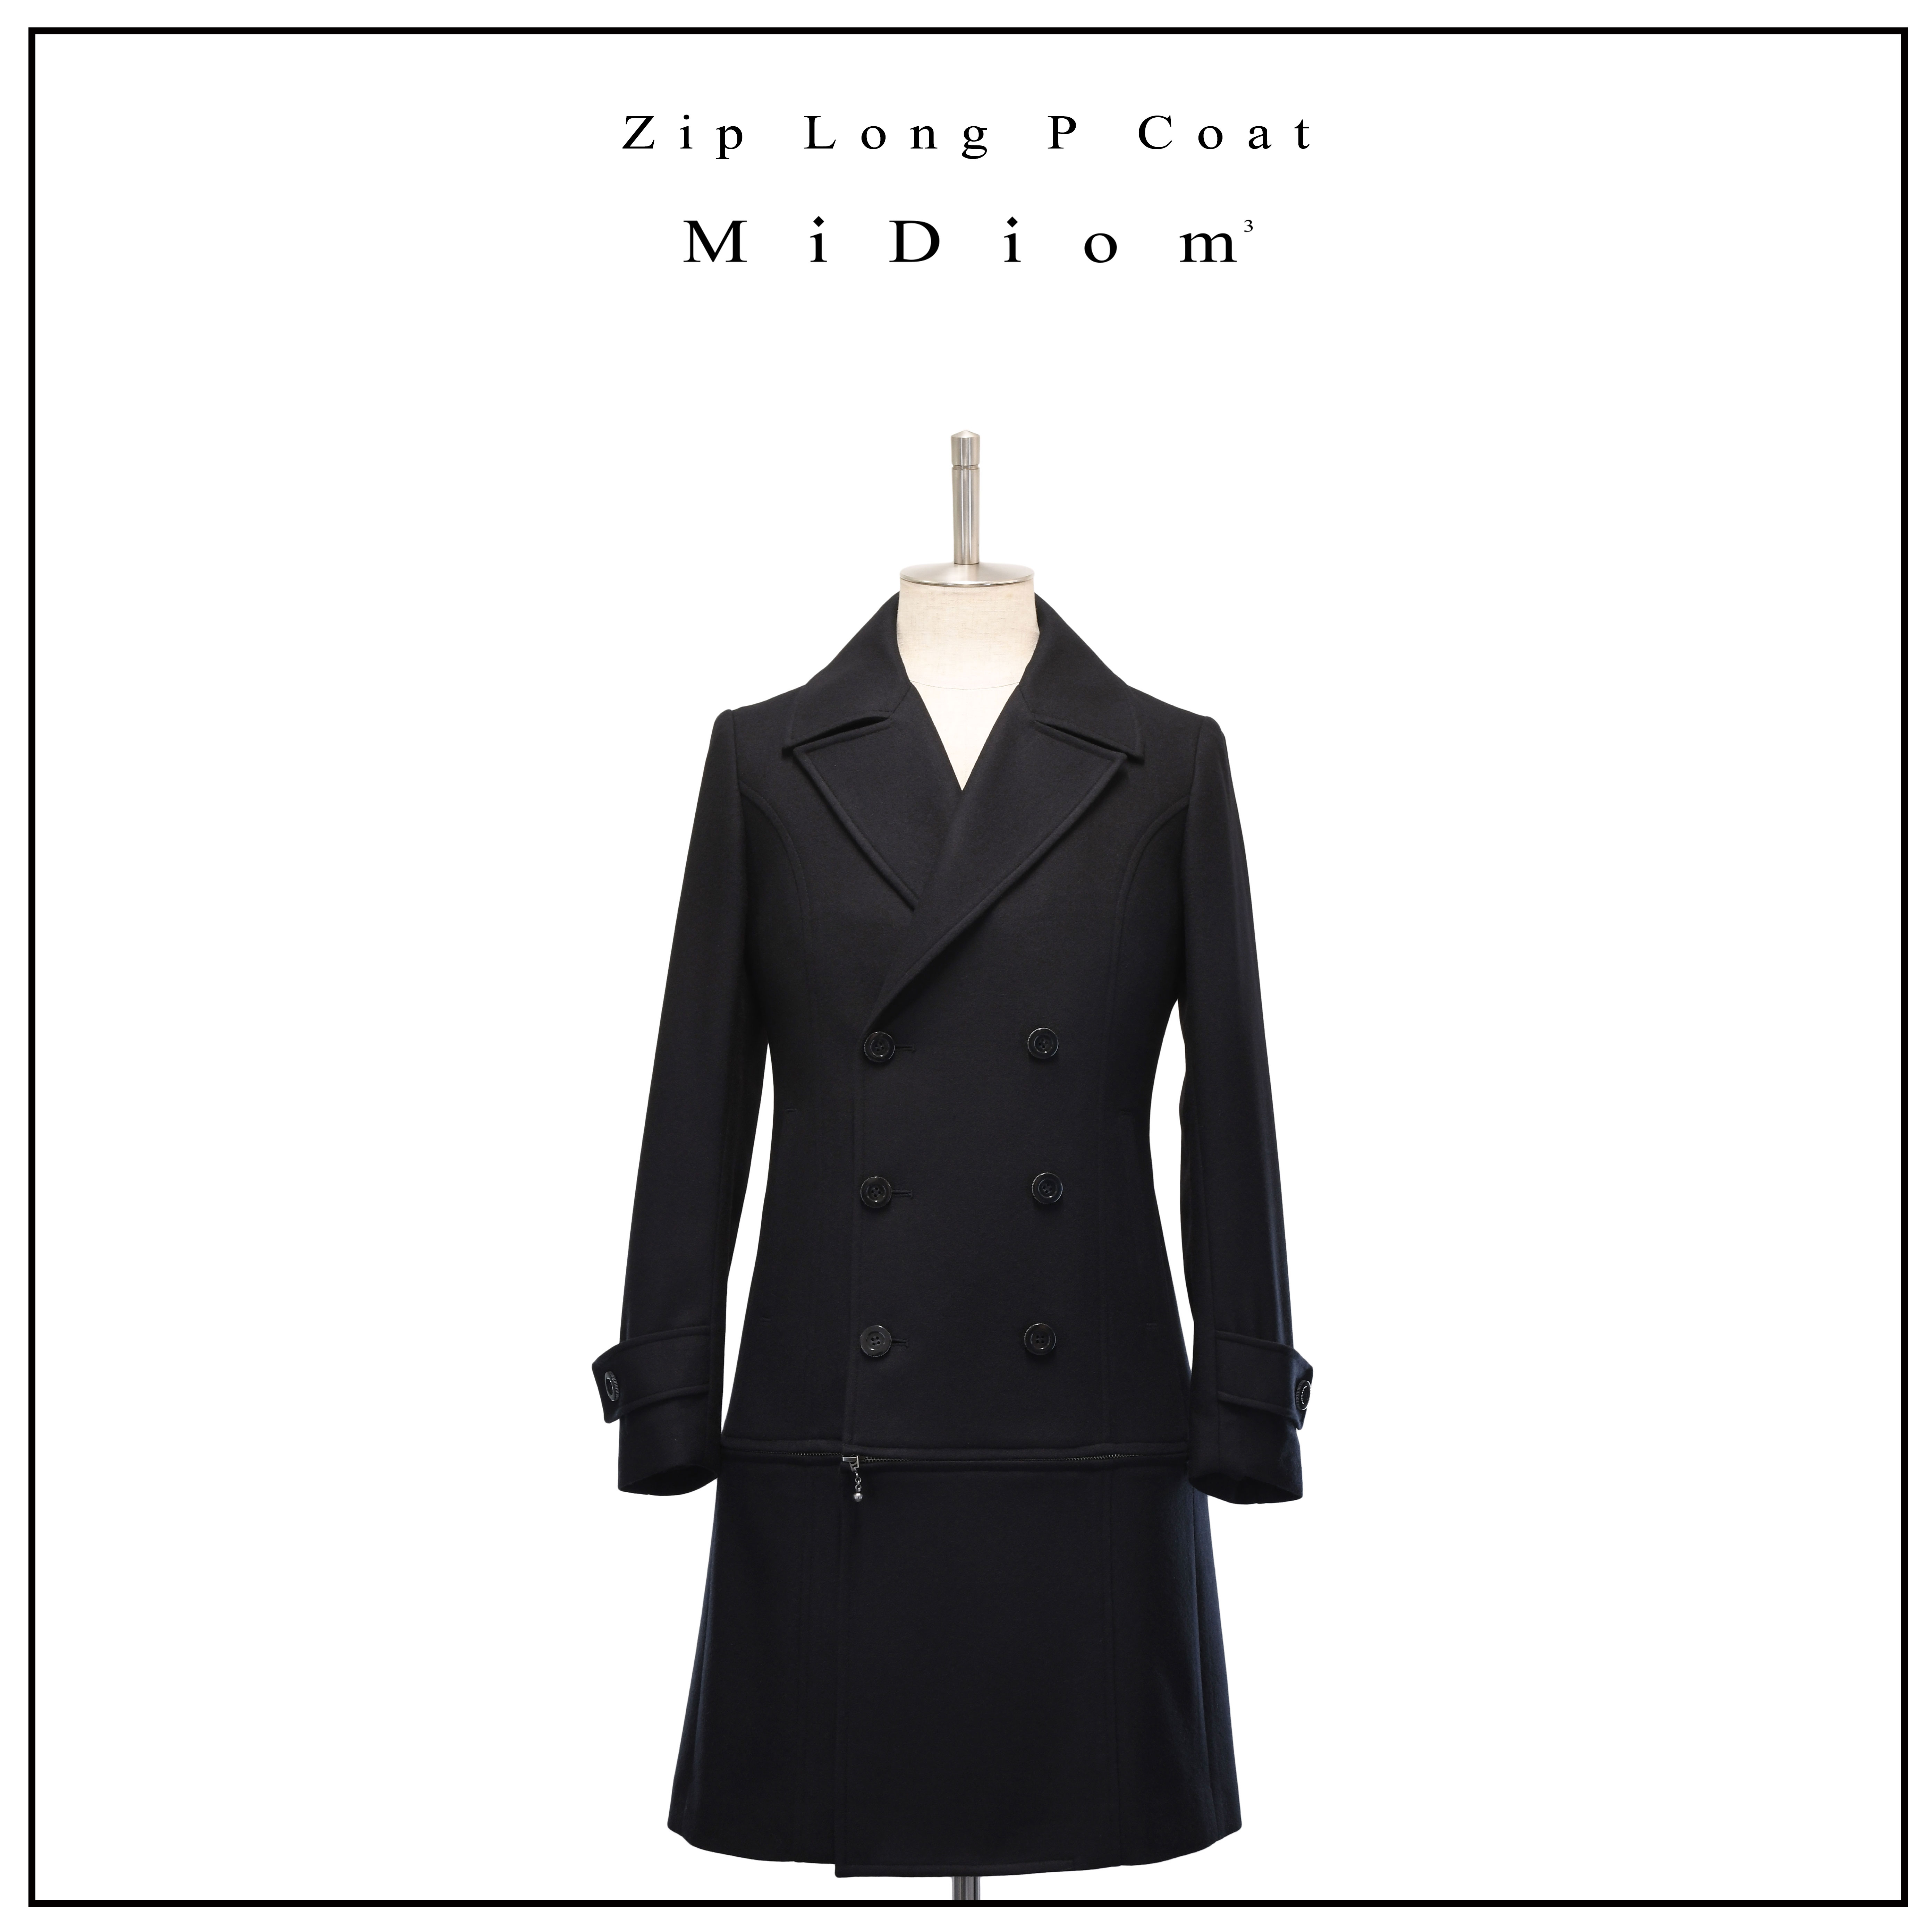 【MiDiom】Zip Long P Coat掲載しました